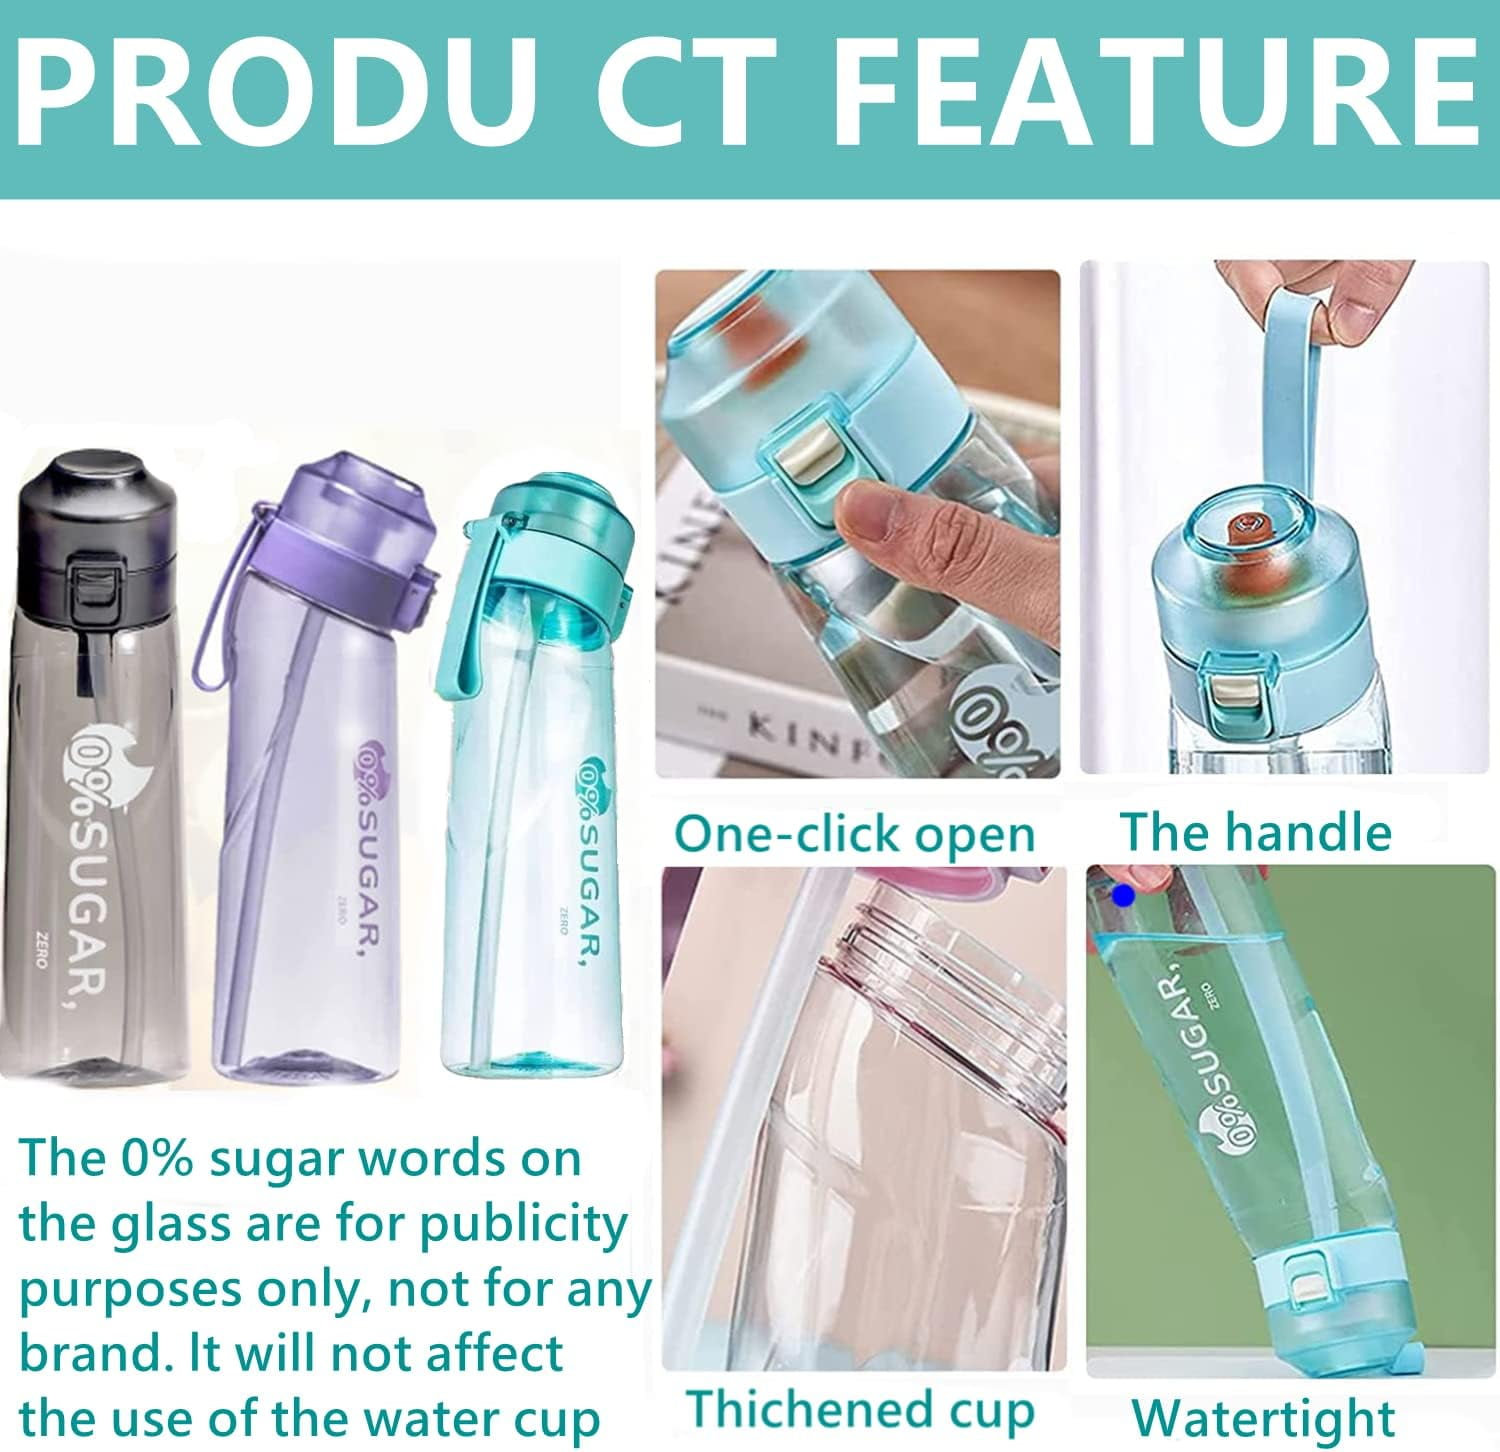 Flavor Air Water Bottle, Air Water Bottle with 7 Flavor Pods, 750ML Air  Drinking Water Bottle Starte…See more Flavor Air Water Bottle, Air Water